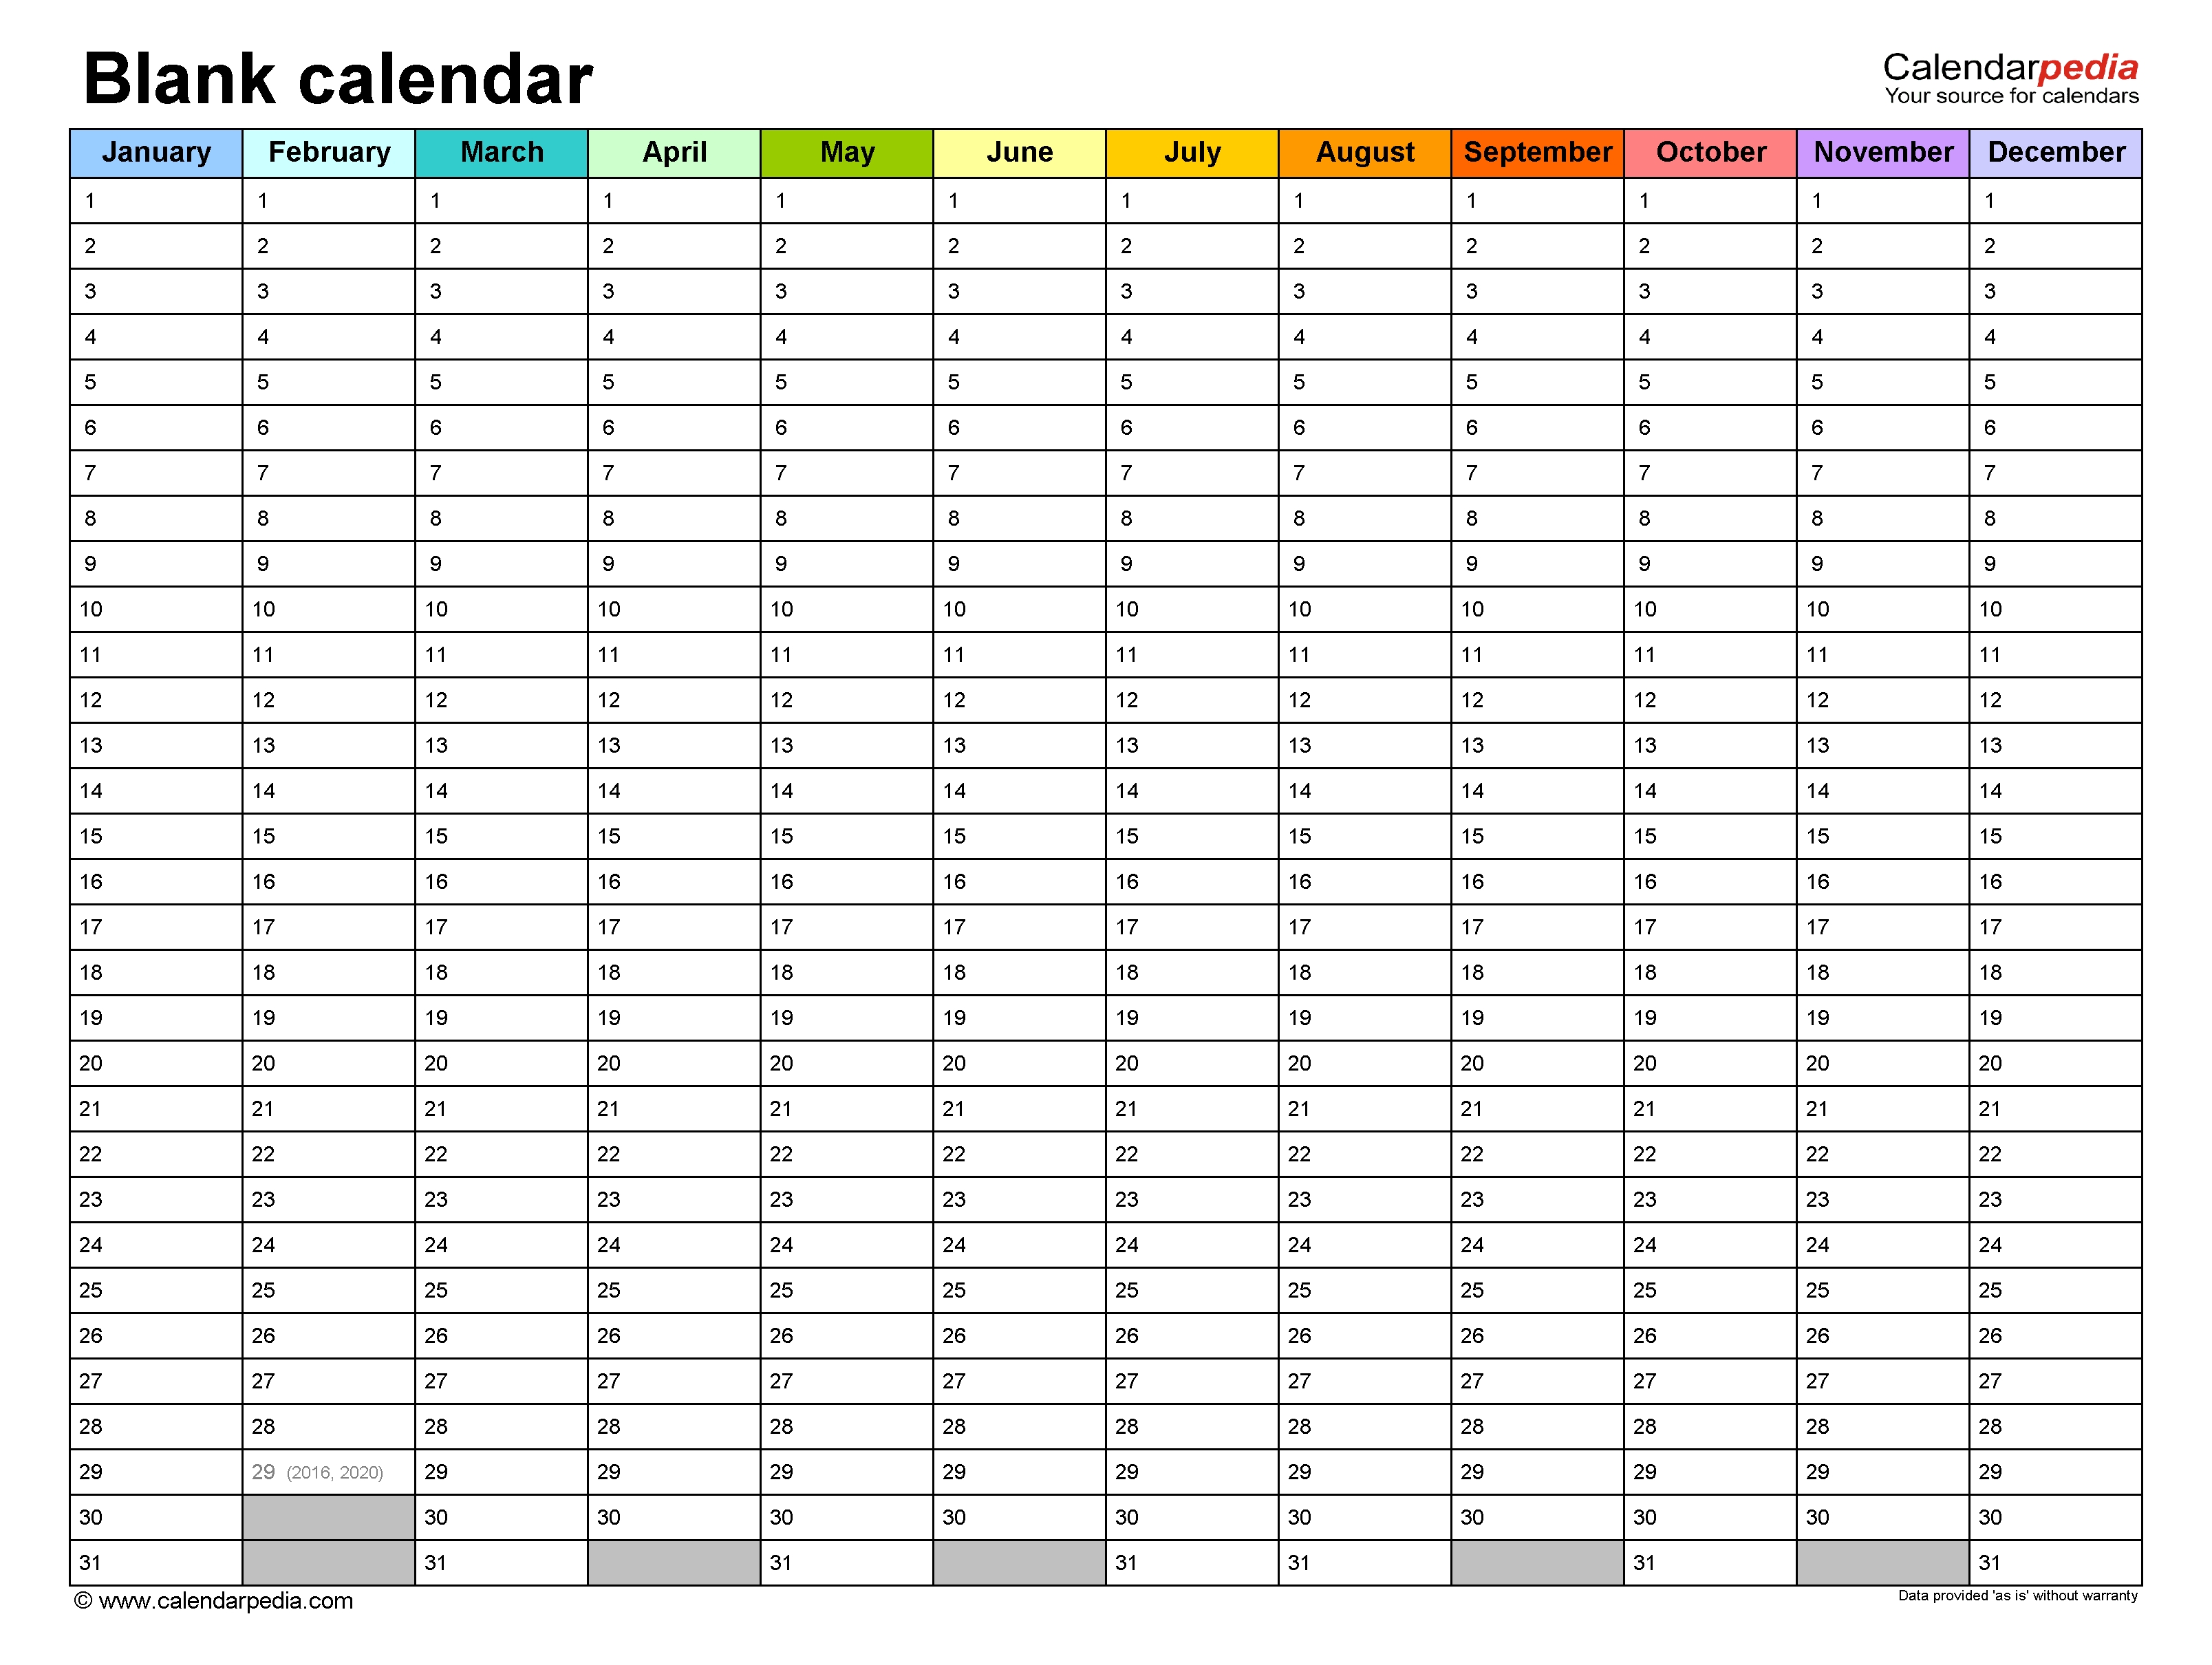 Blank Calendars - Free Printable Microsoft Word Templates Calendar Template Microsoft Office